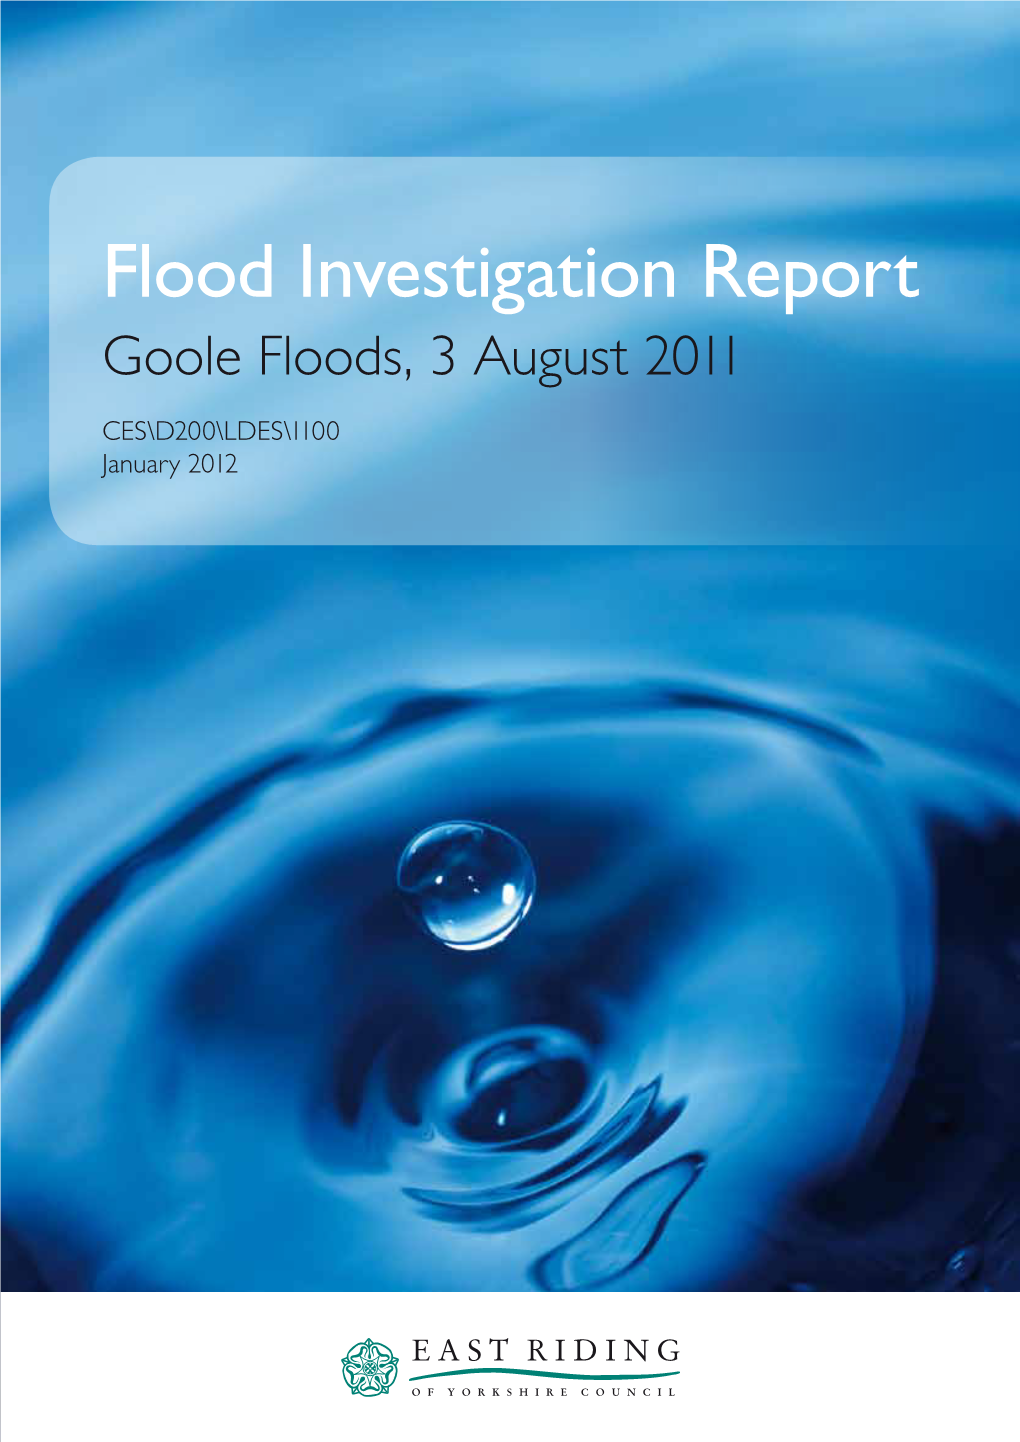 Flood Investigation Report Goole Floods, 3 August 2011